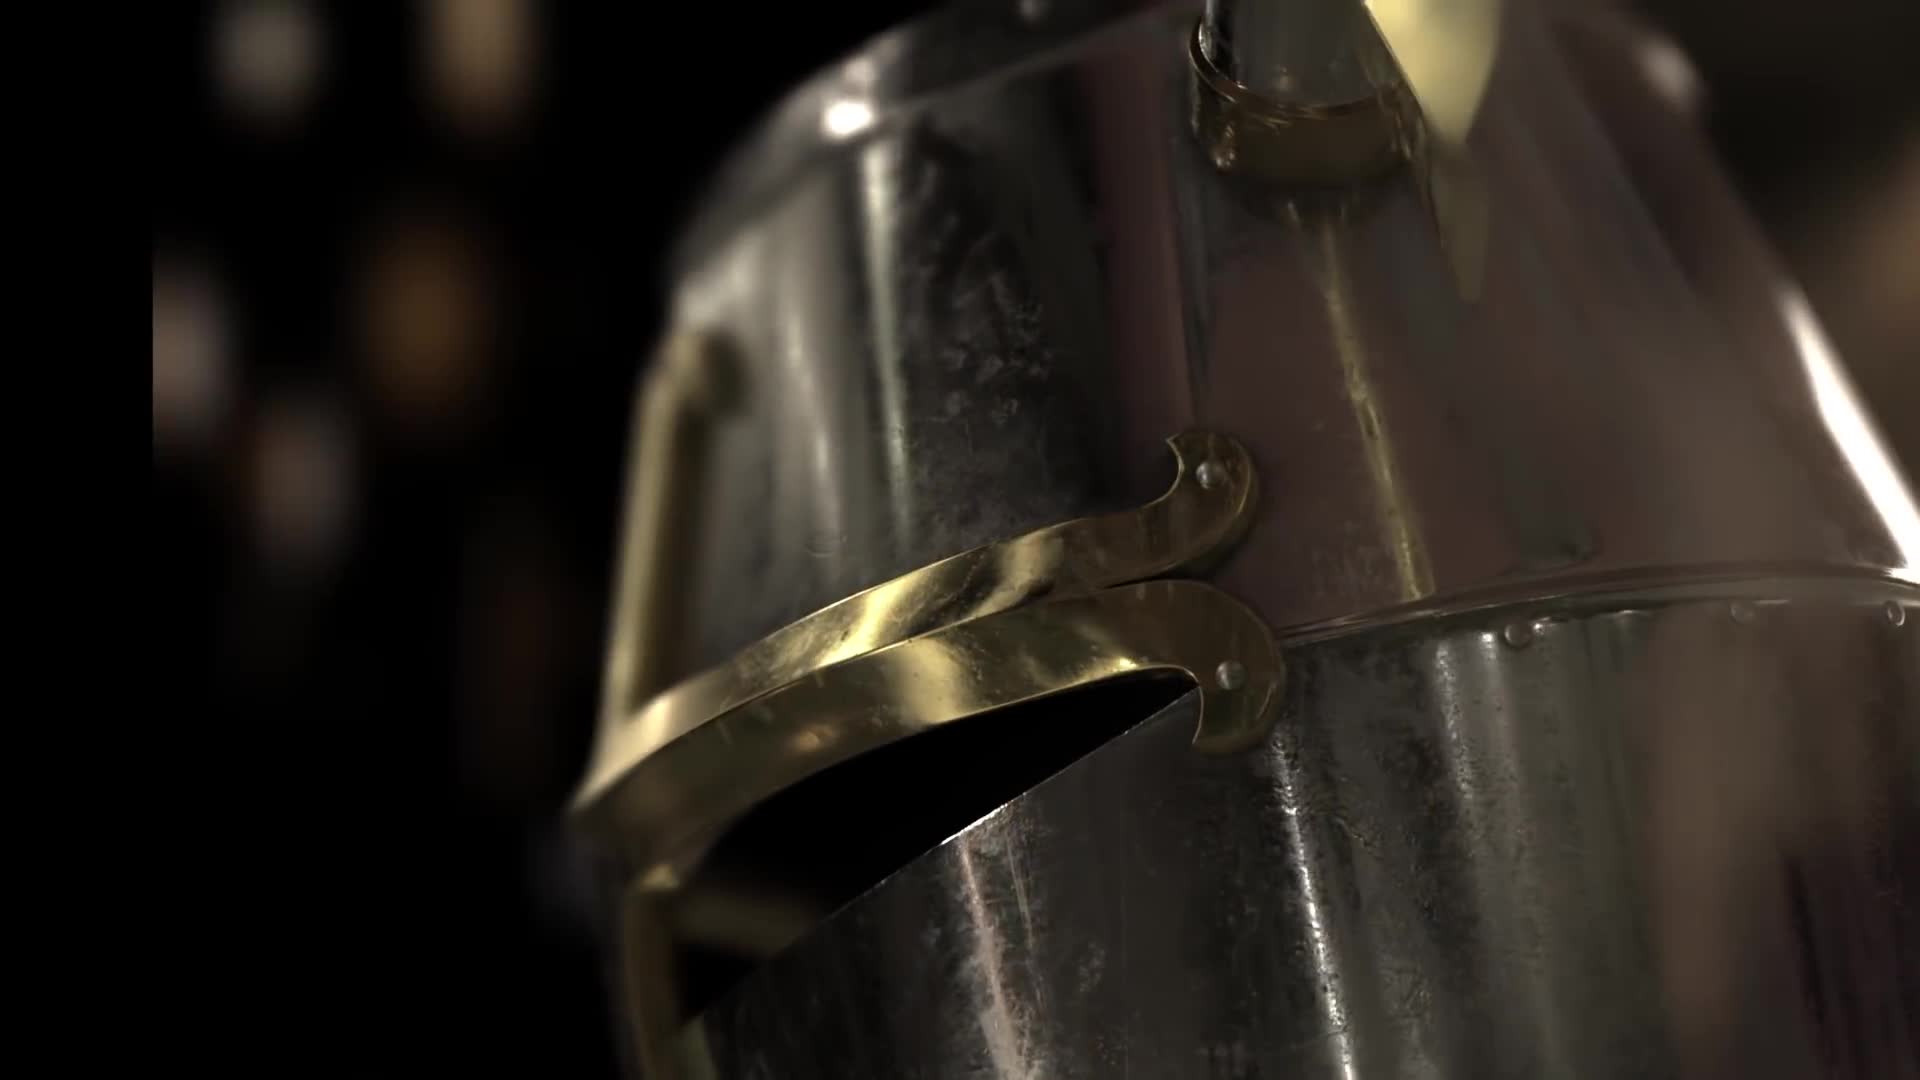 Crusader Kings II: Holy Fury - Announcement Trailer